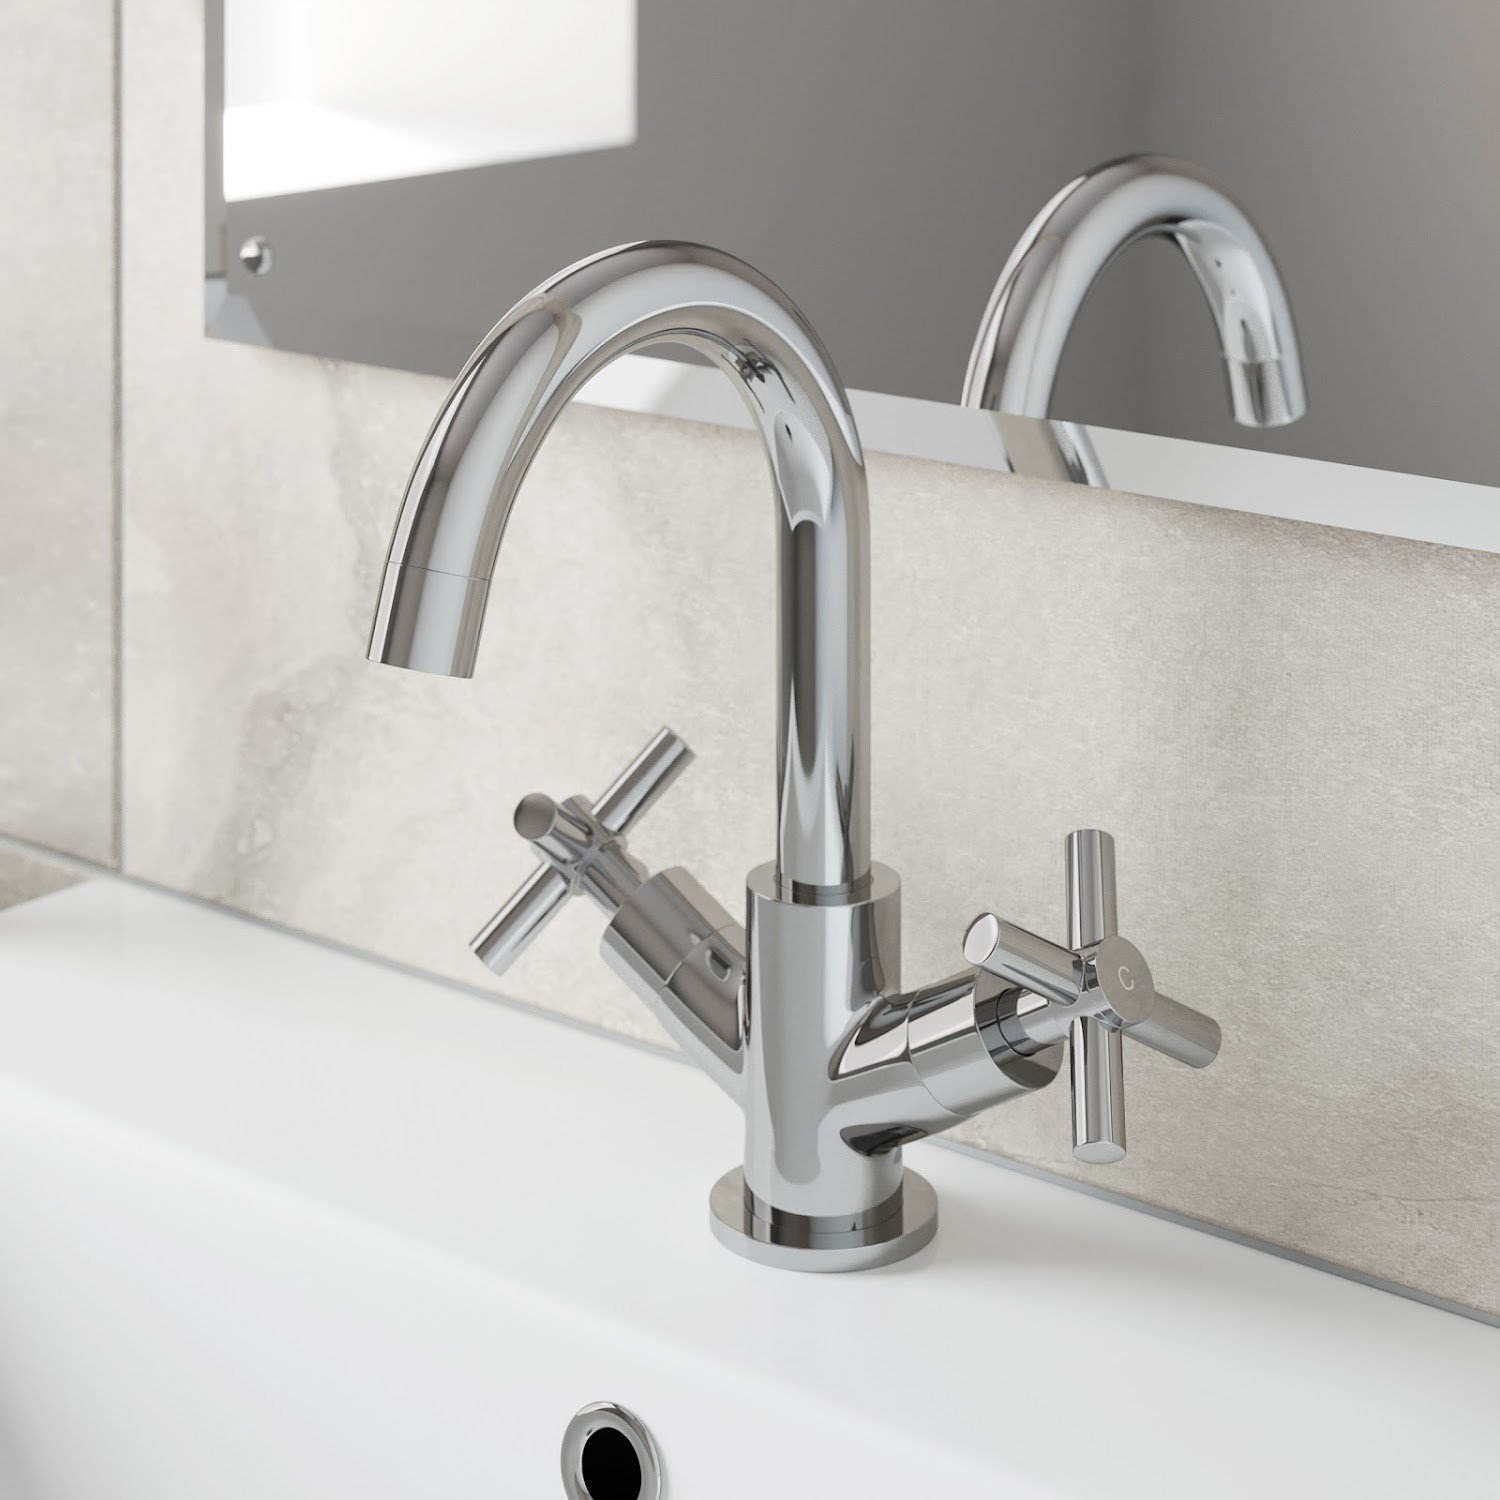 Bathroom Mono Basin Sink Mixer Tap Modern Cross Head Handle Chrome Curved Spout 5056093611024 Ebay